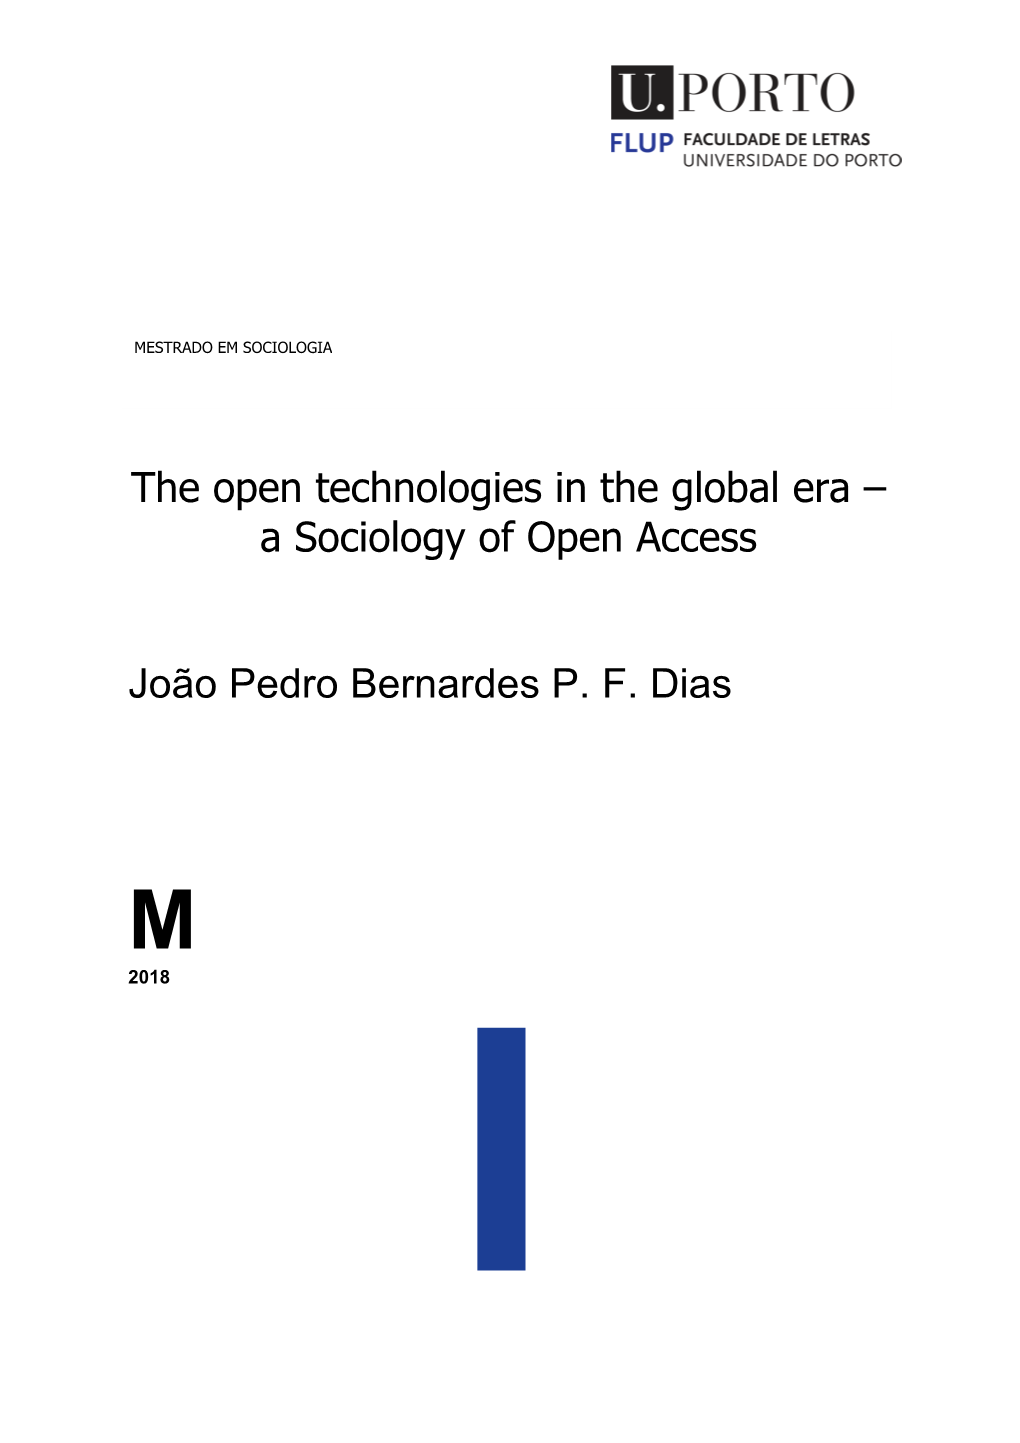 A Sociology of Open Access João Pedro Bernardes PF Dias